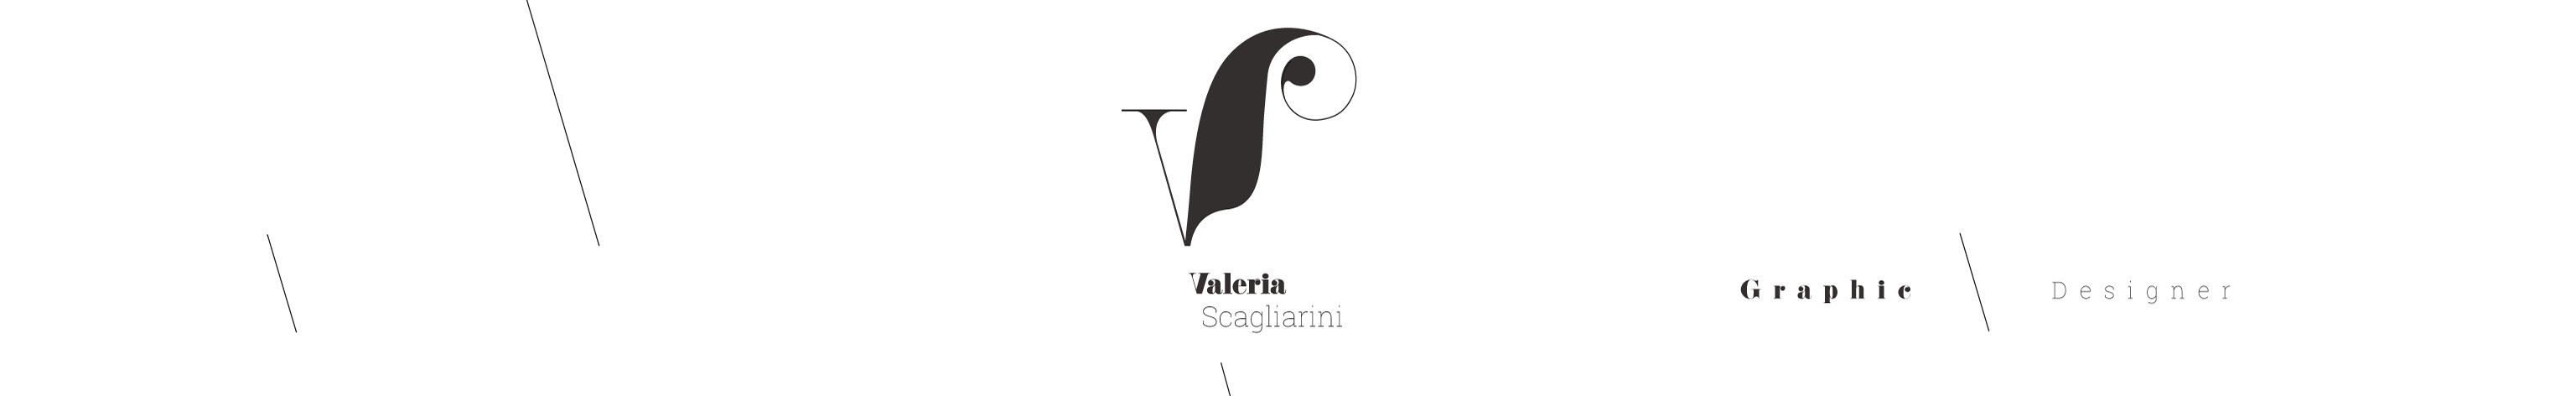 Baner profilu użytkownika Valeria Scagliarini